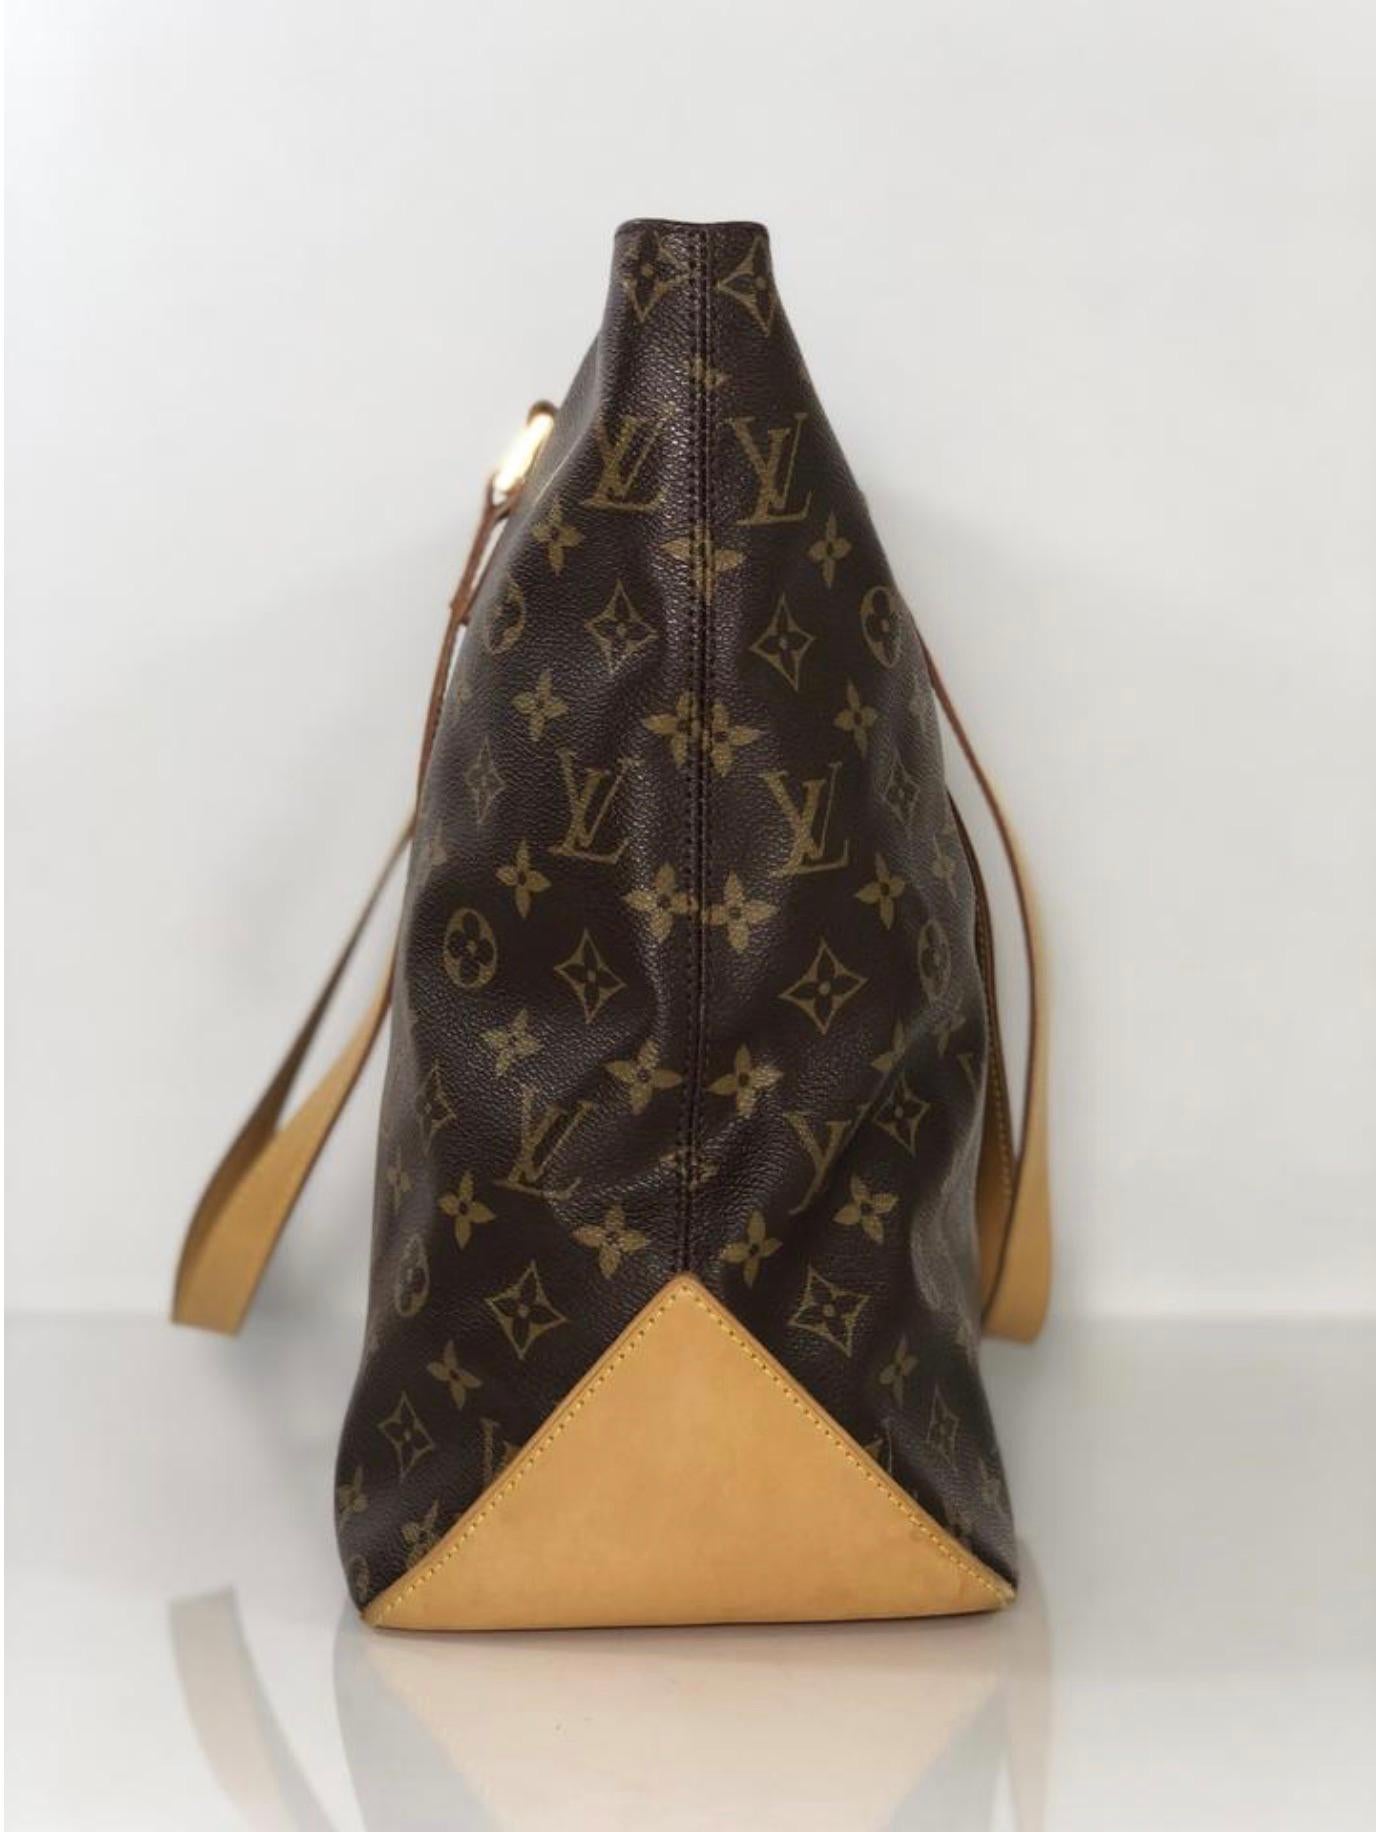 Louis Vuitton Monogram Cabas Mezzo Tote Shoulder Handbag In Good Condition For Sale In Saint Charles, IL